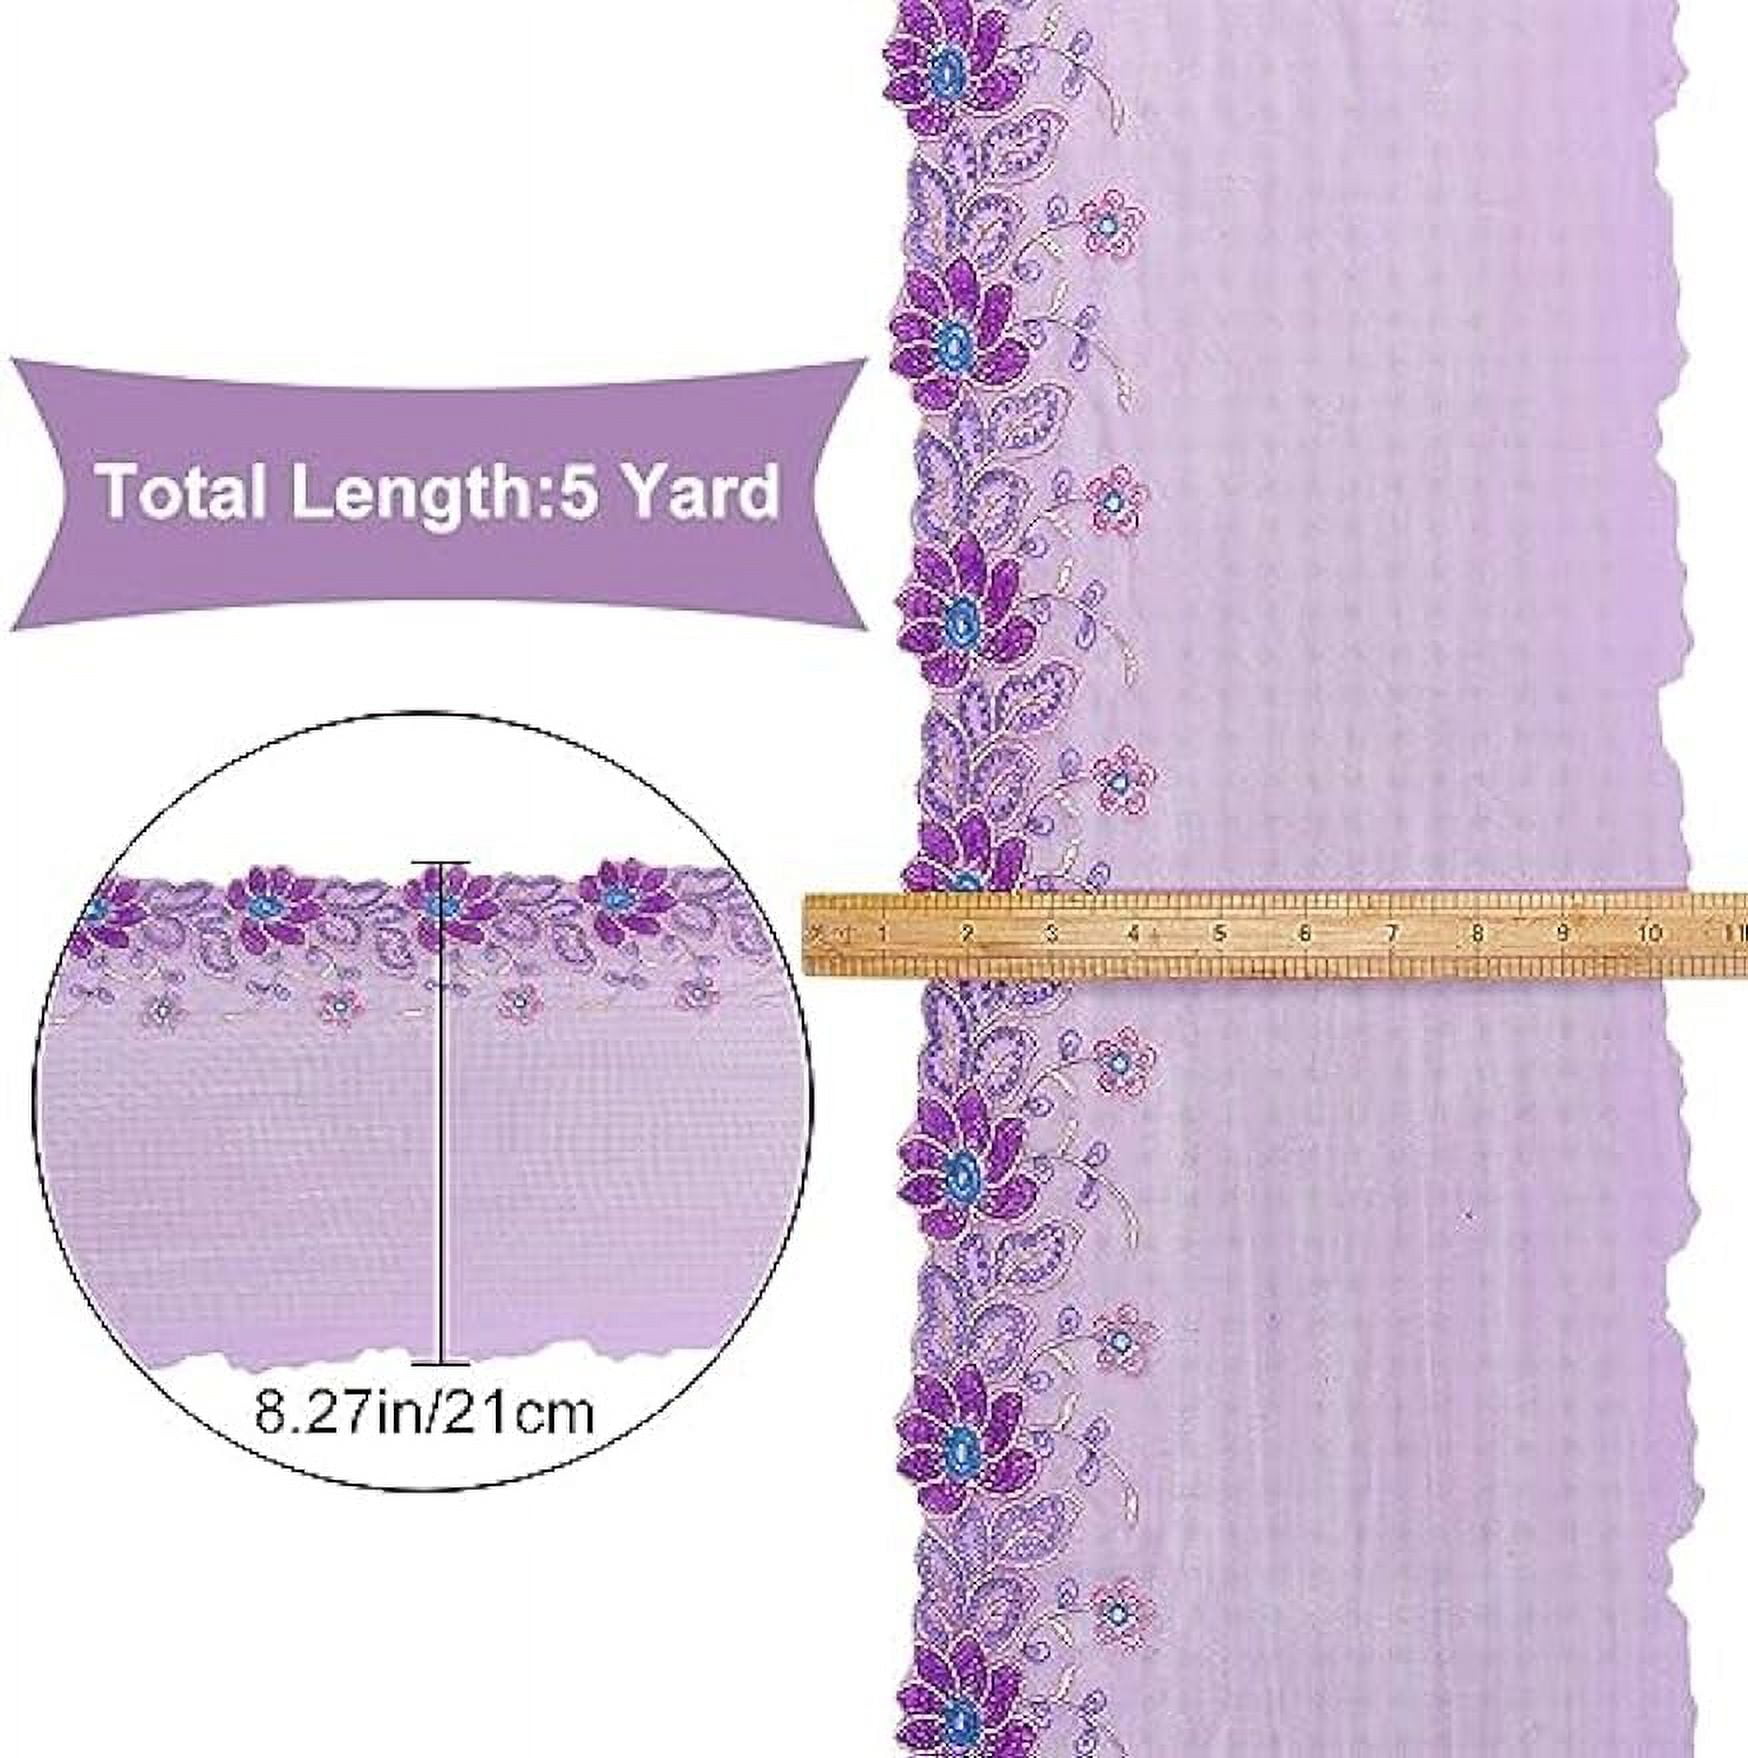 CRASPIRE 6 Yards Flower Lace Ribbon Vintage Purple Floral Edging